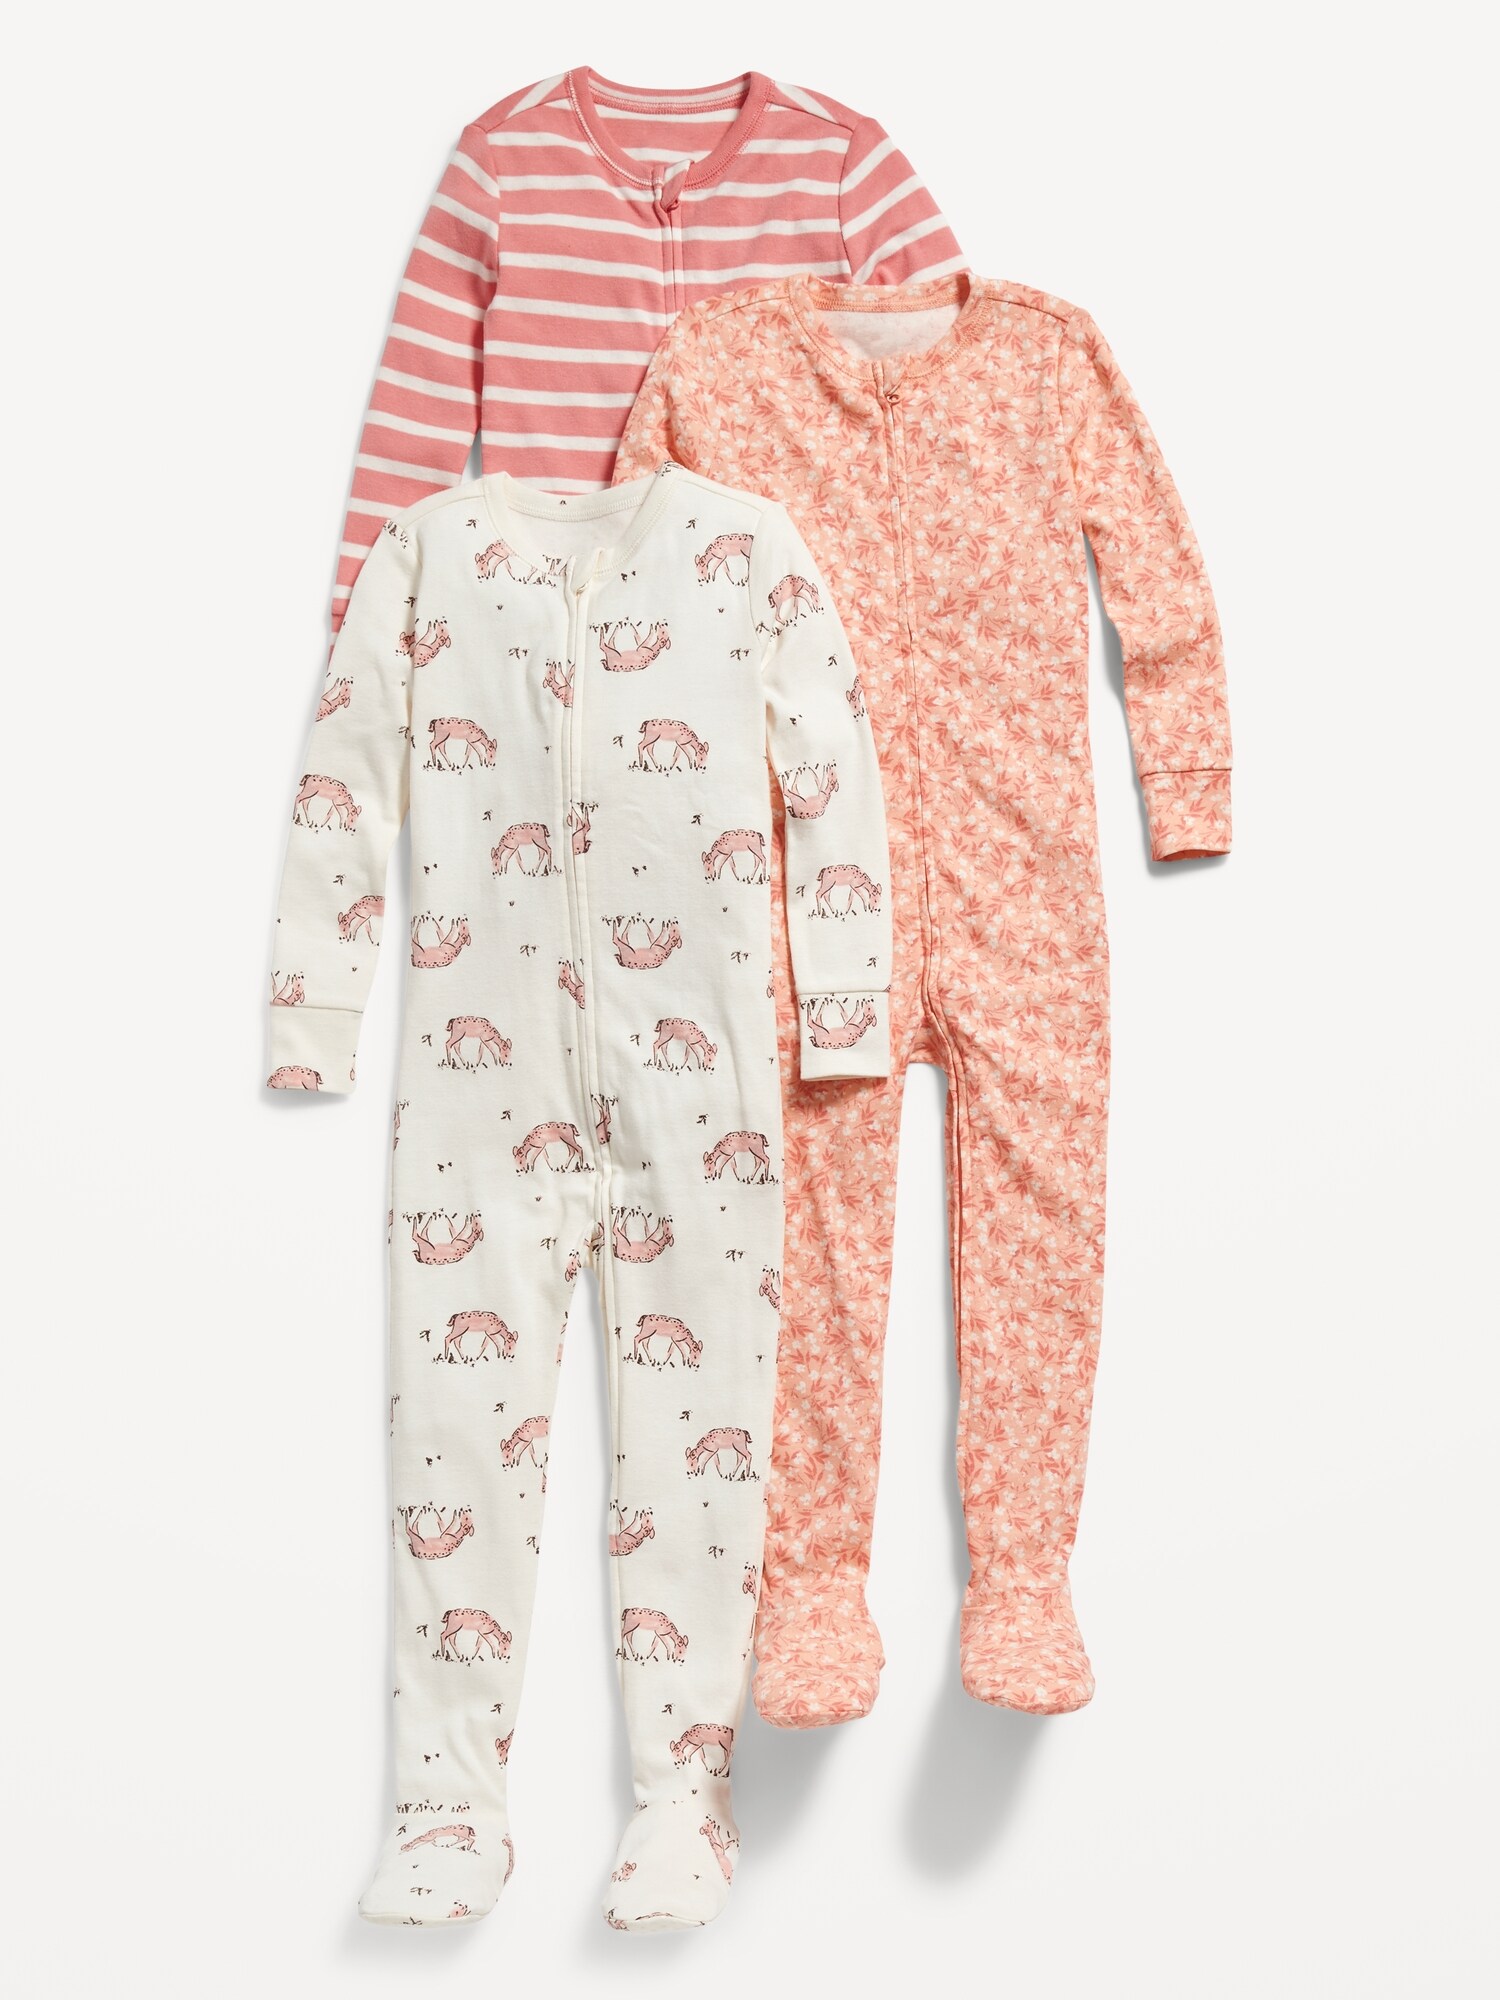 Unisex 2-Way-Zip Printed Footie Pajama One-Piece 3-Pack for Toddler ...